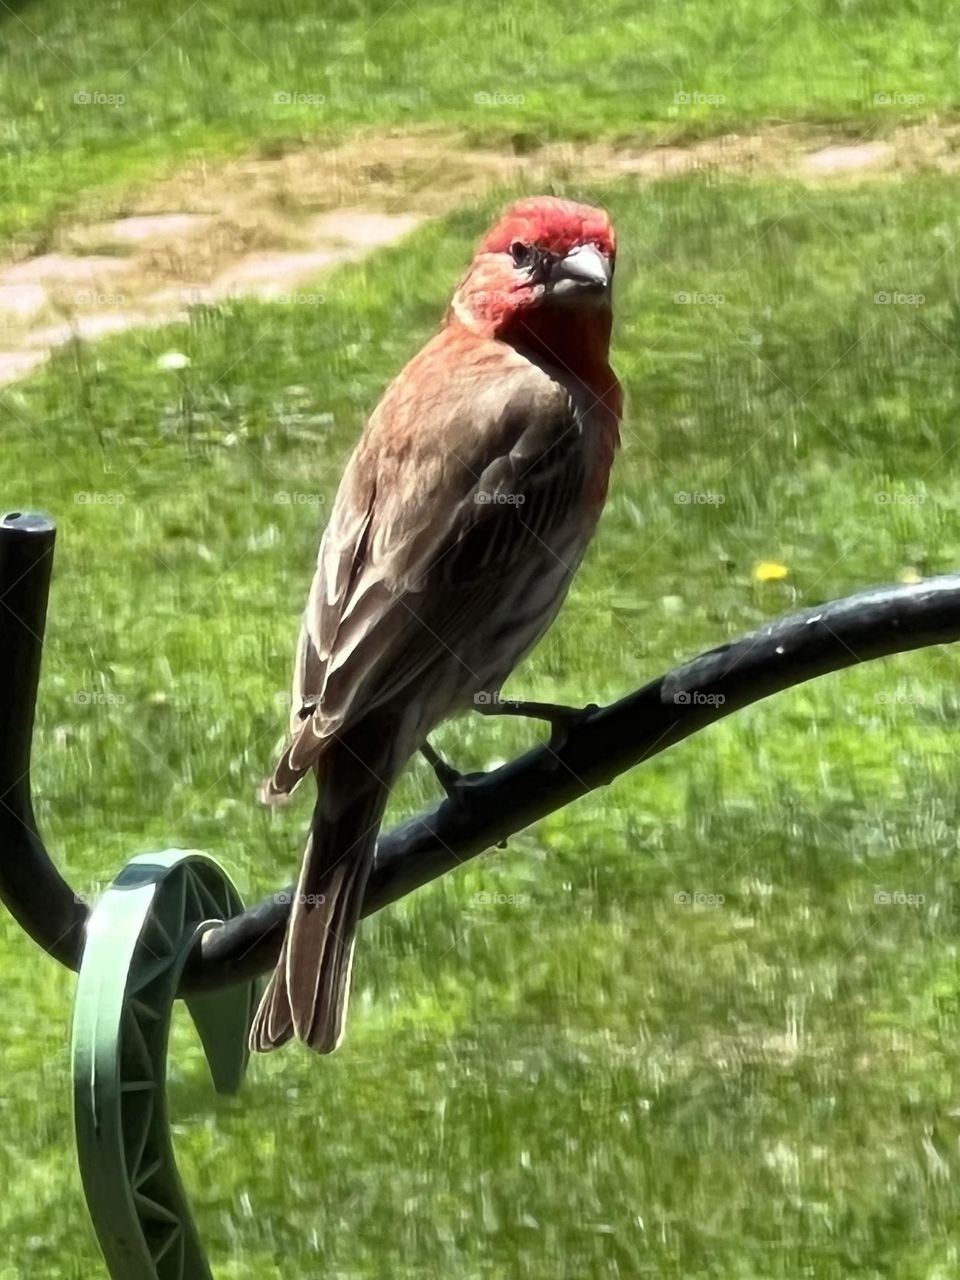 Finch at my feeder. Pretty bird